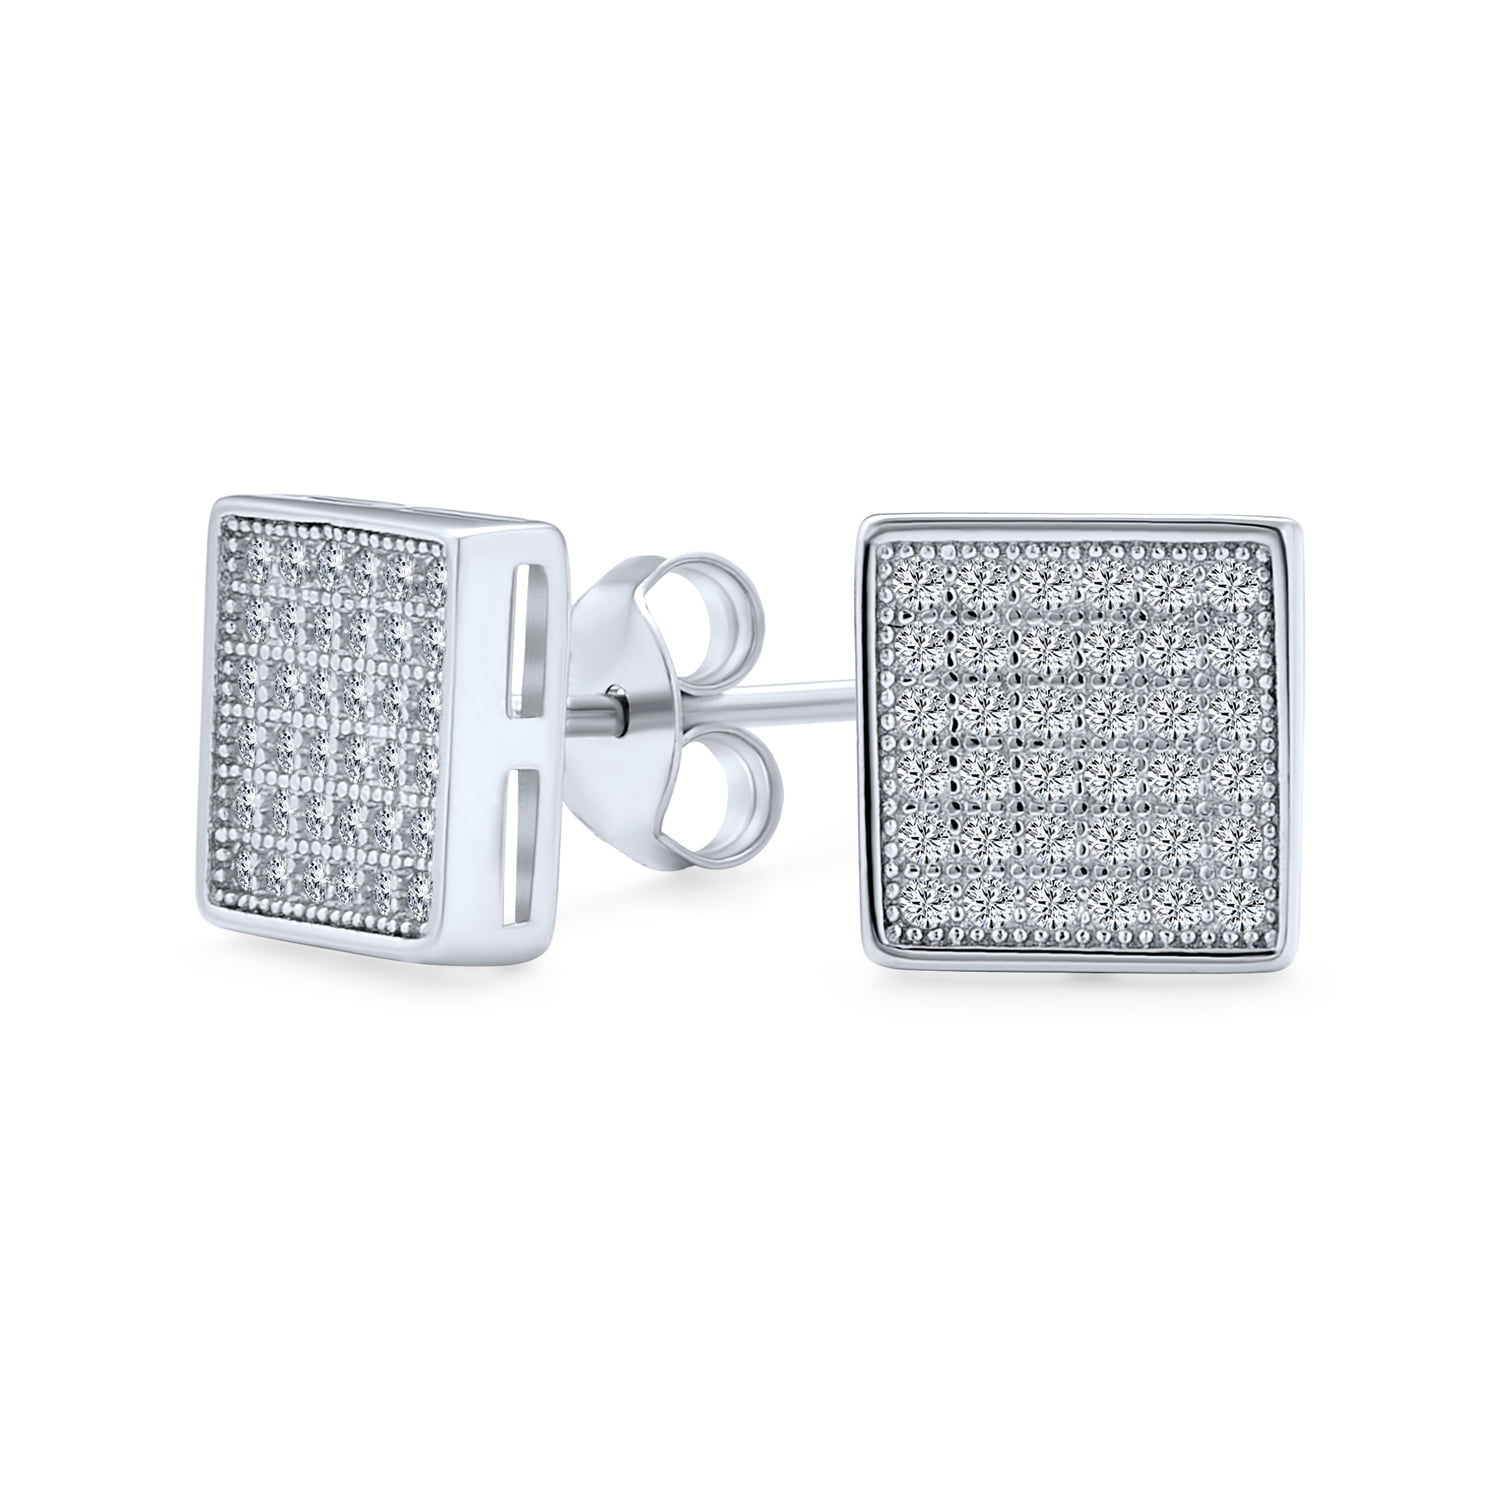 12 Carat tw Cubic Zirconia Square Shape Stud Earrings in 925 Sterling Silver Jewelry